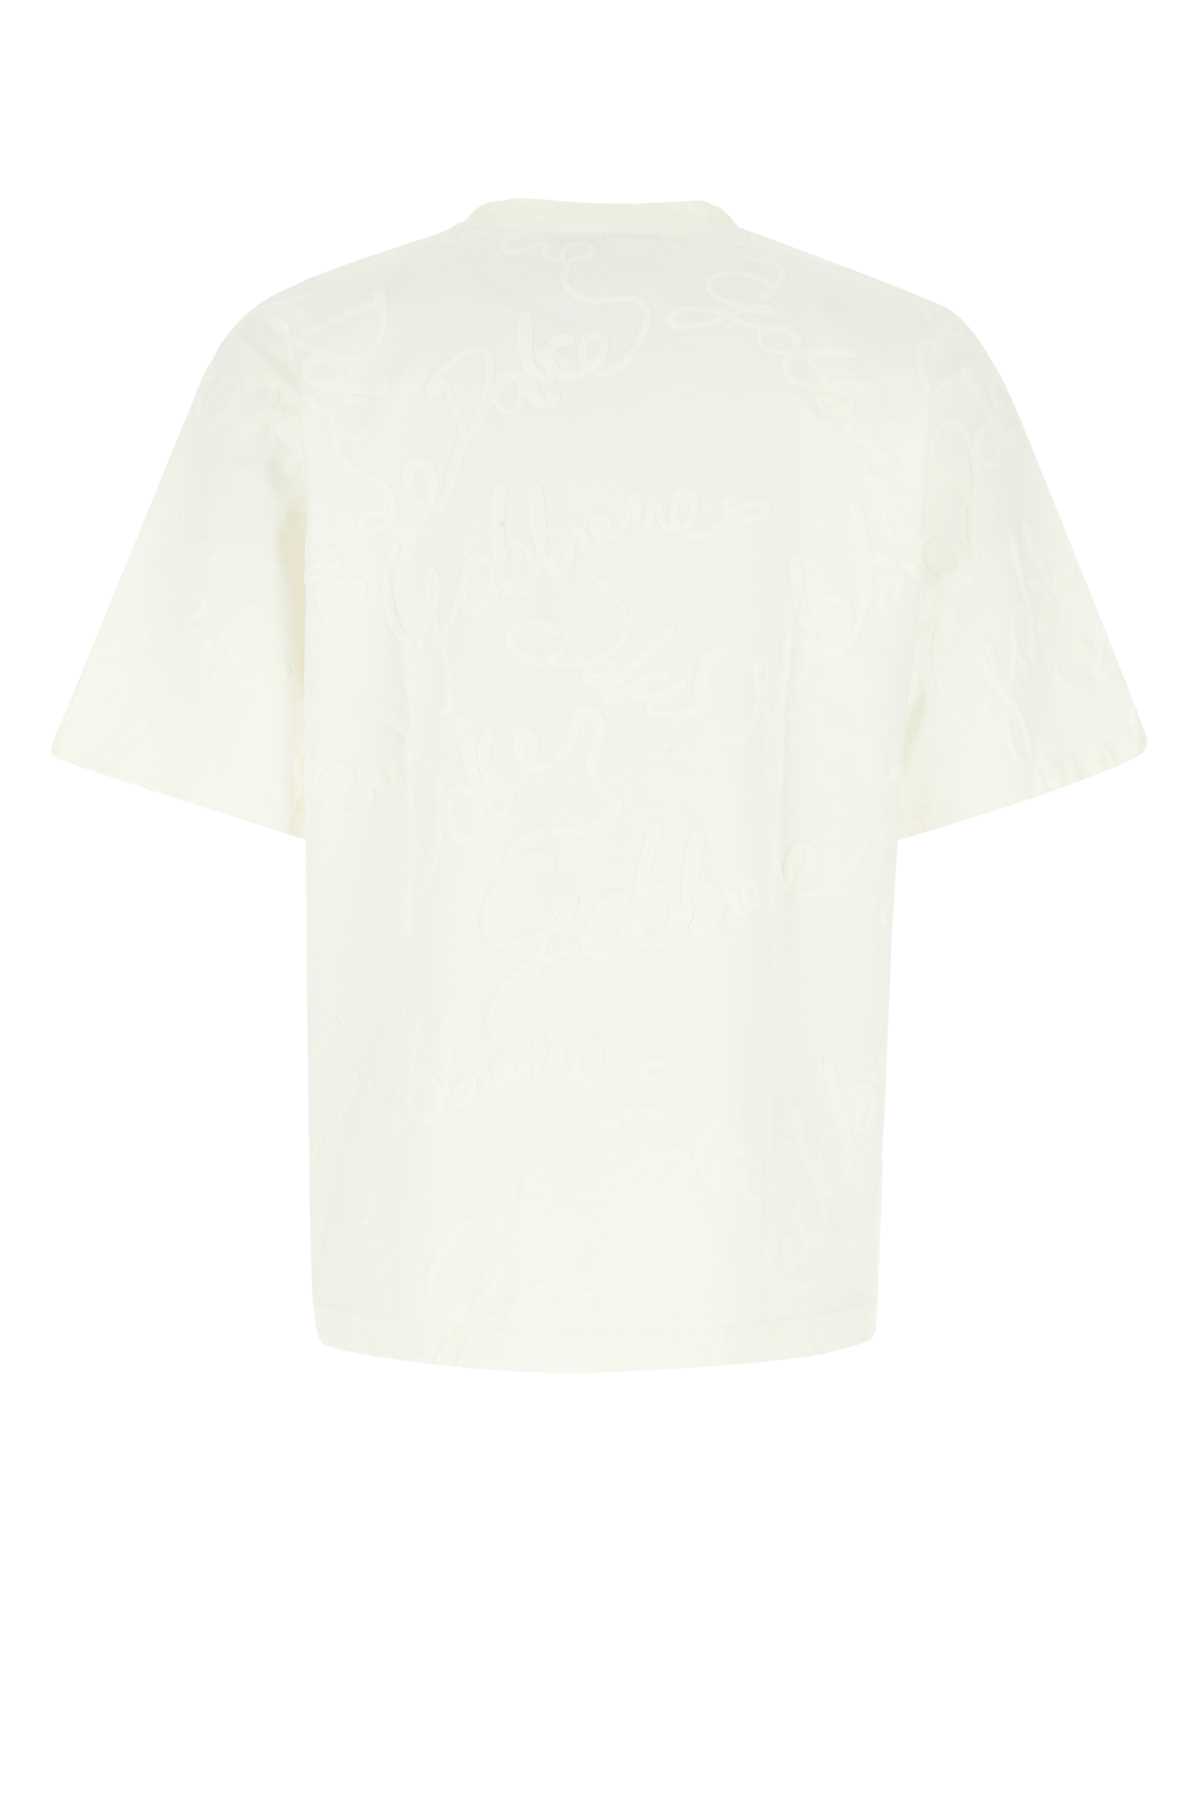 Shop Dolce & Gabbana White Cotton T-shirt In Logobcof.bconat